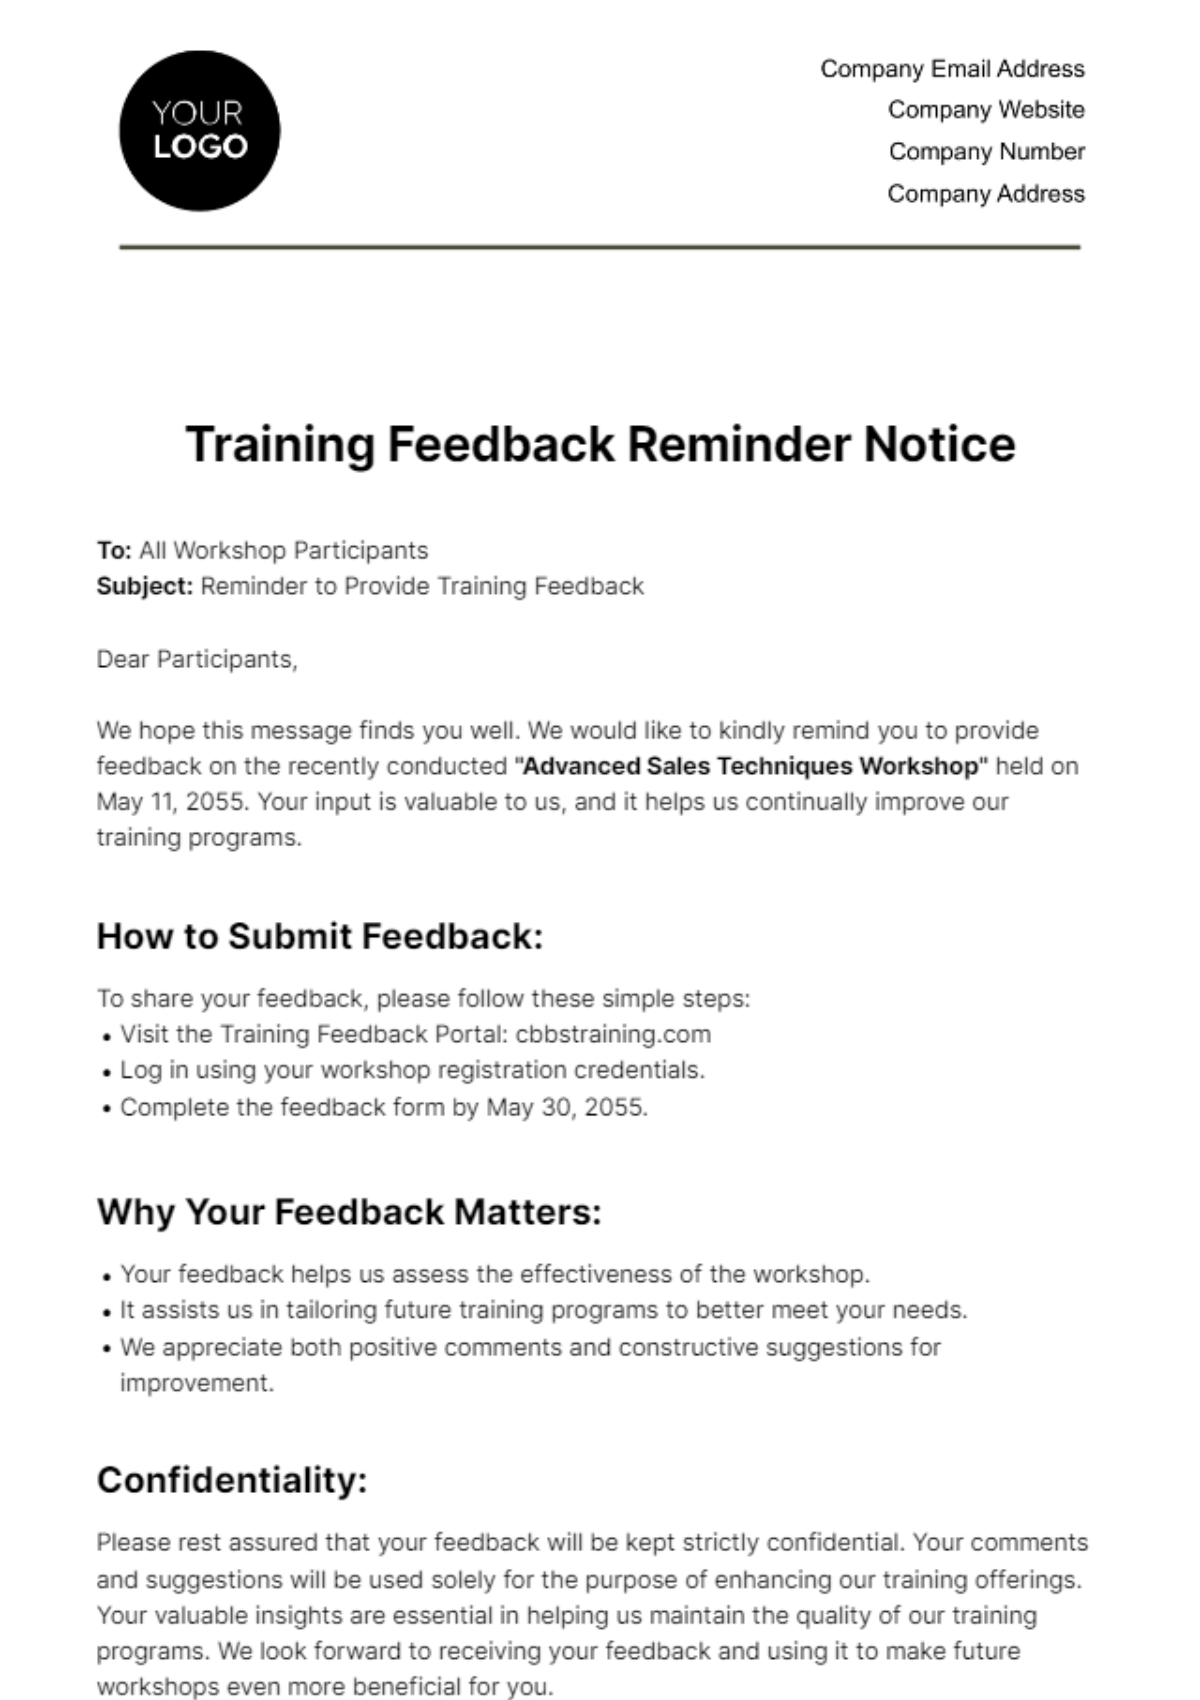 Free Training Feedback Reminder Notice HR Template